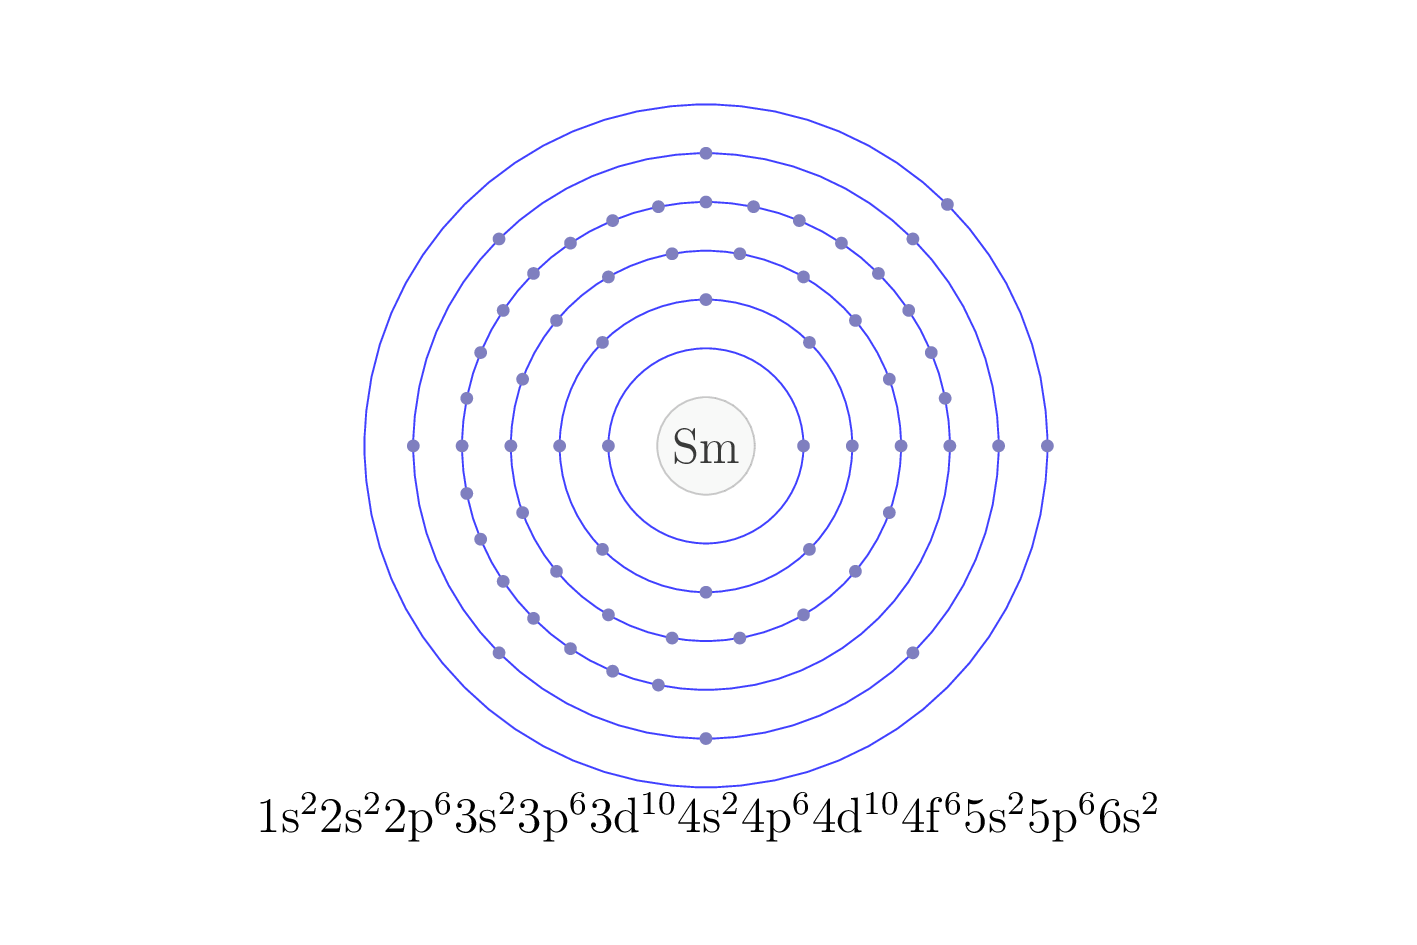 electron configuration of element Sm